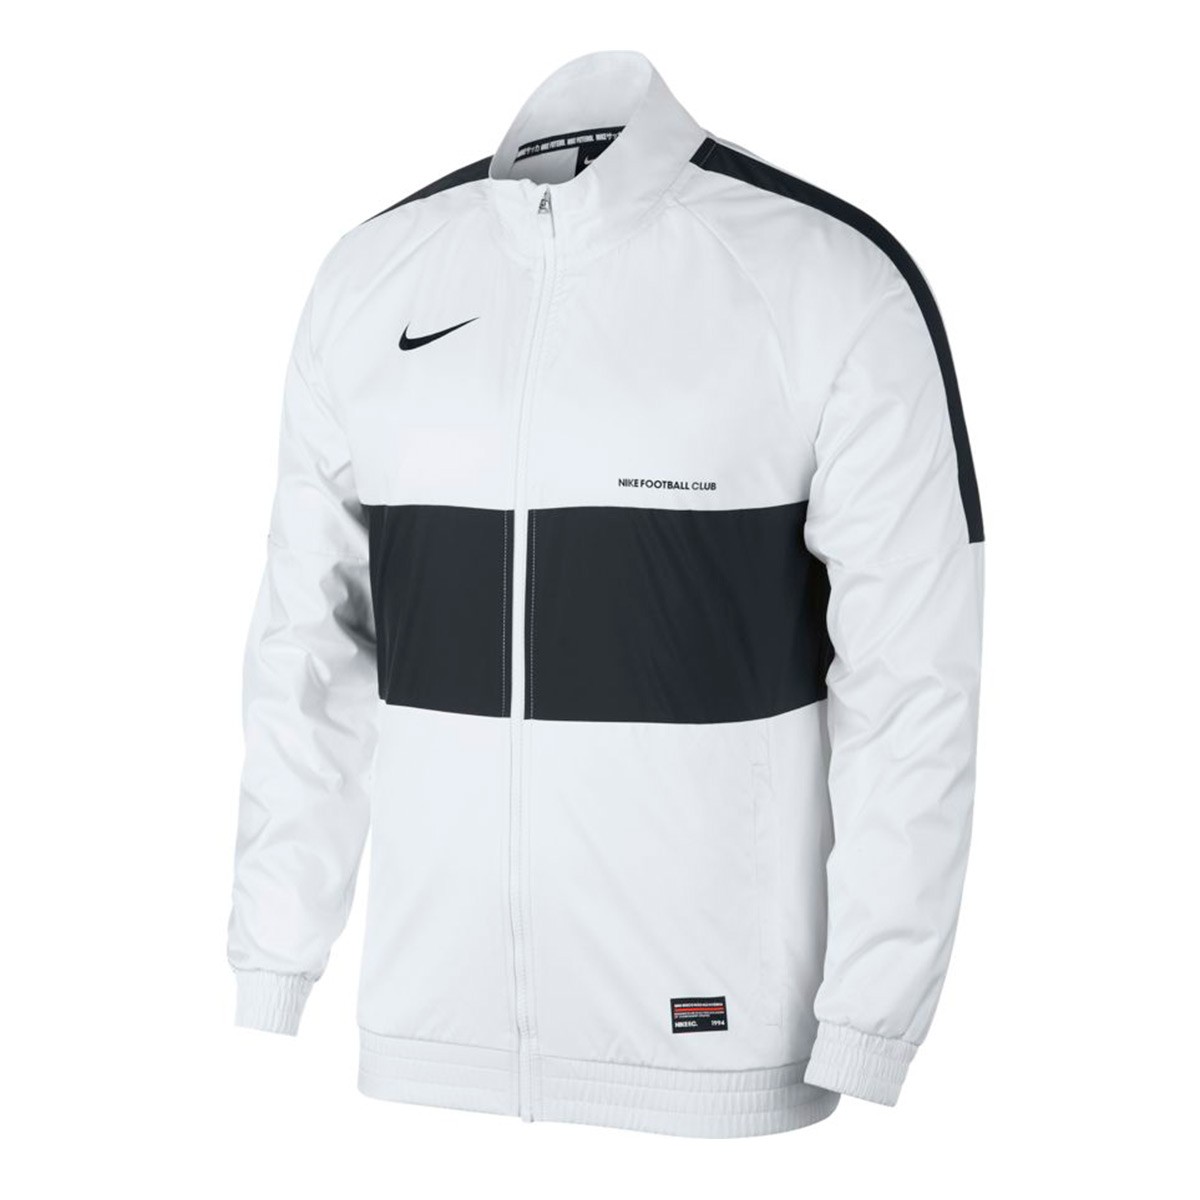 Chaqueta Nike Nike F.C. White-Black - Tienda de fútbol Fútbol Emotion